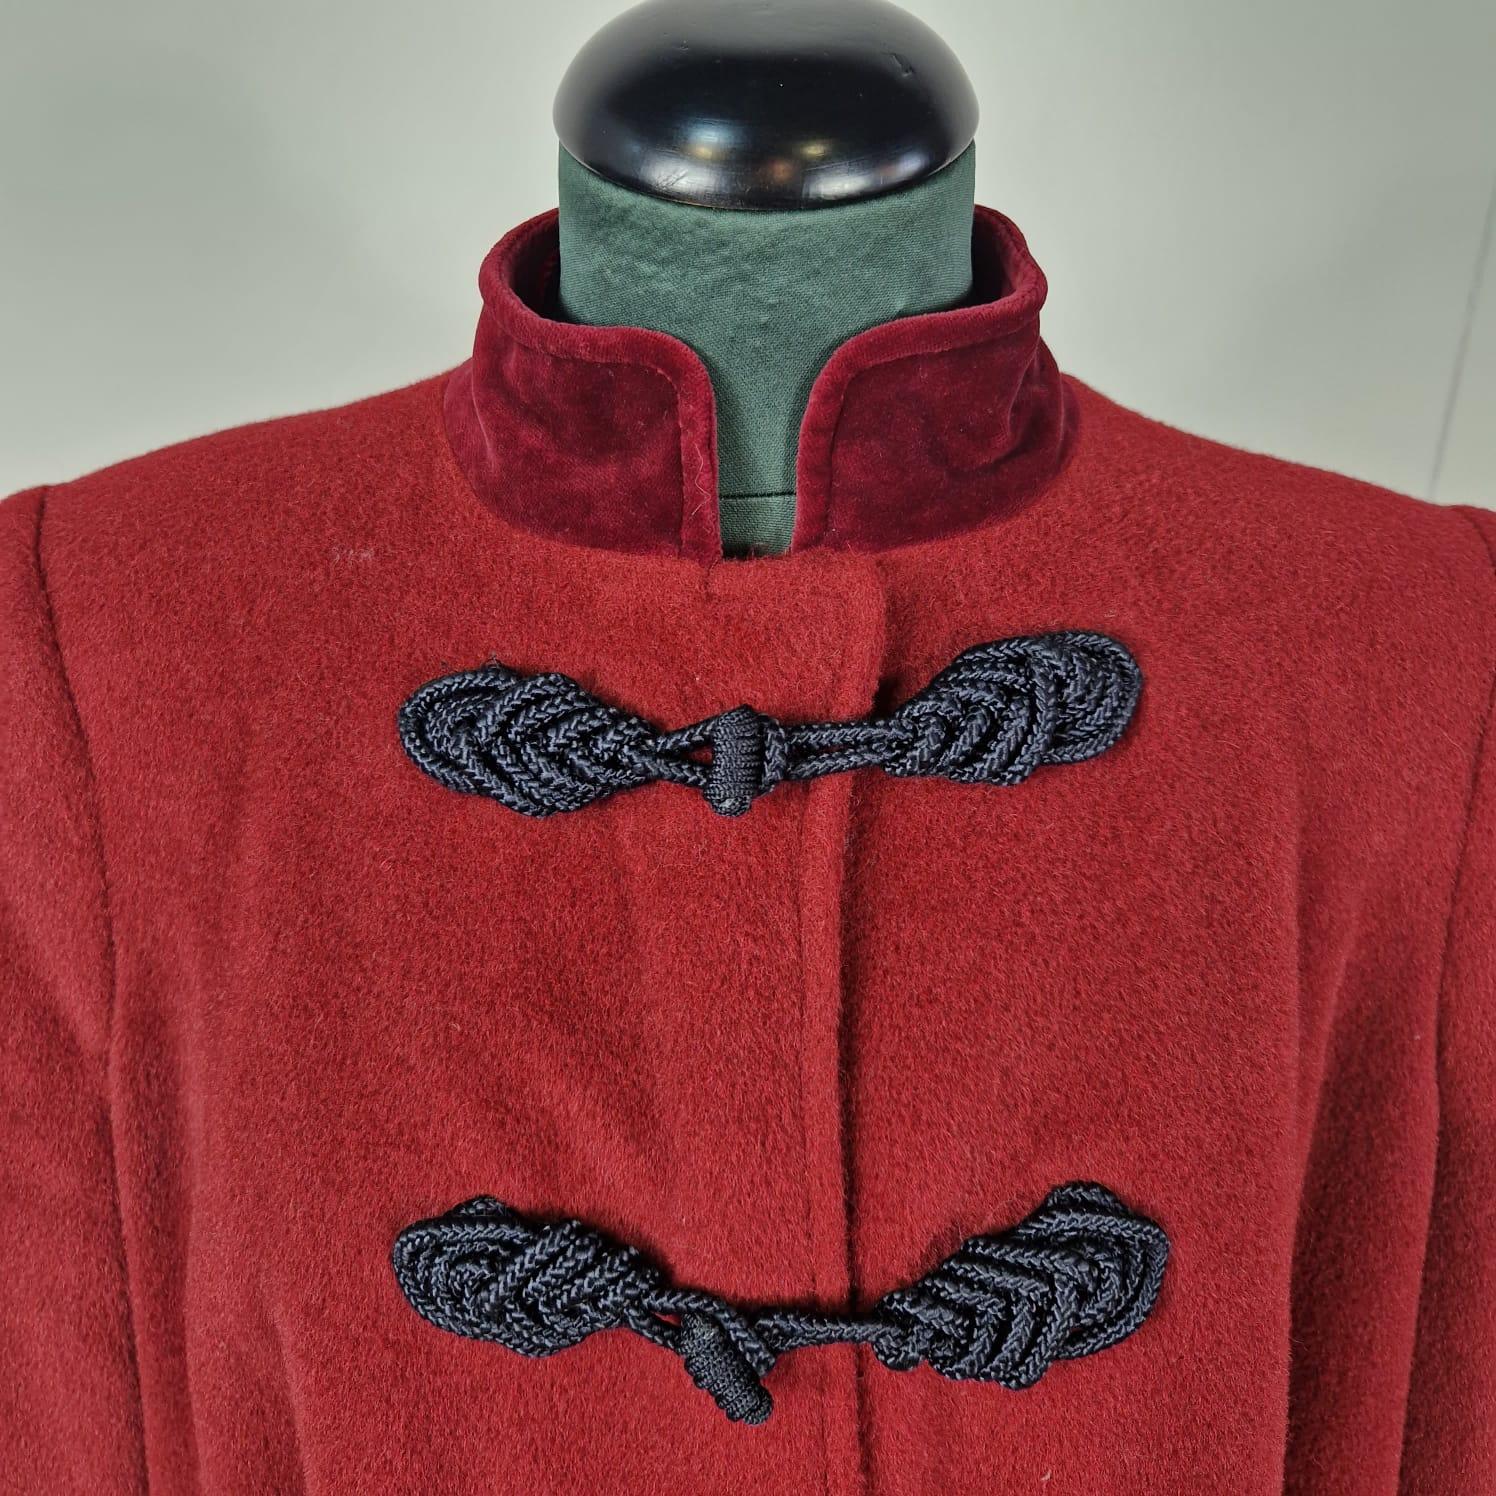 Valentino coat in burgundy wool. 3